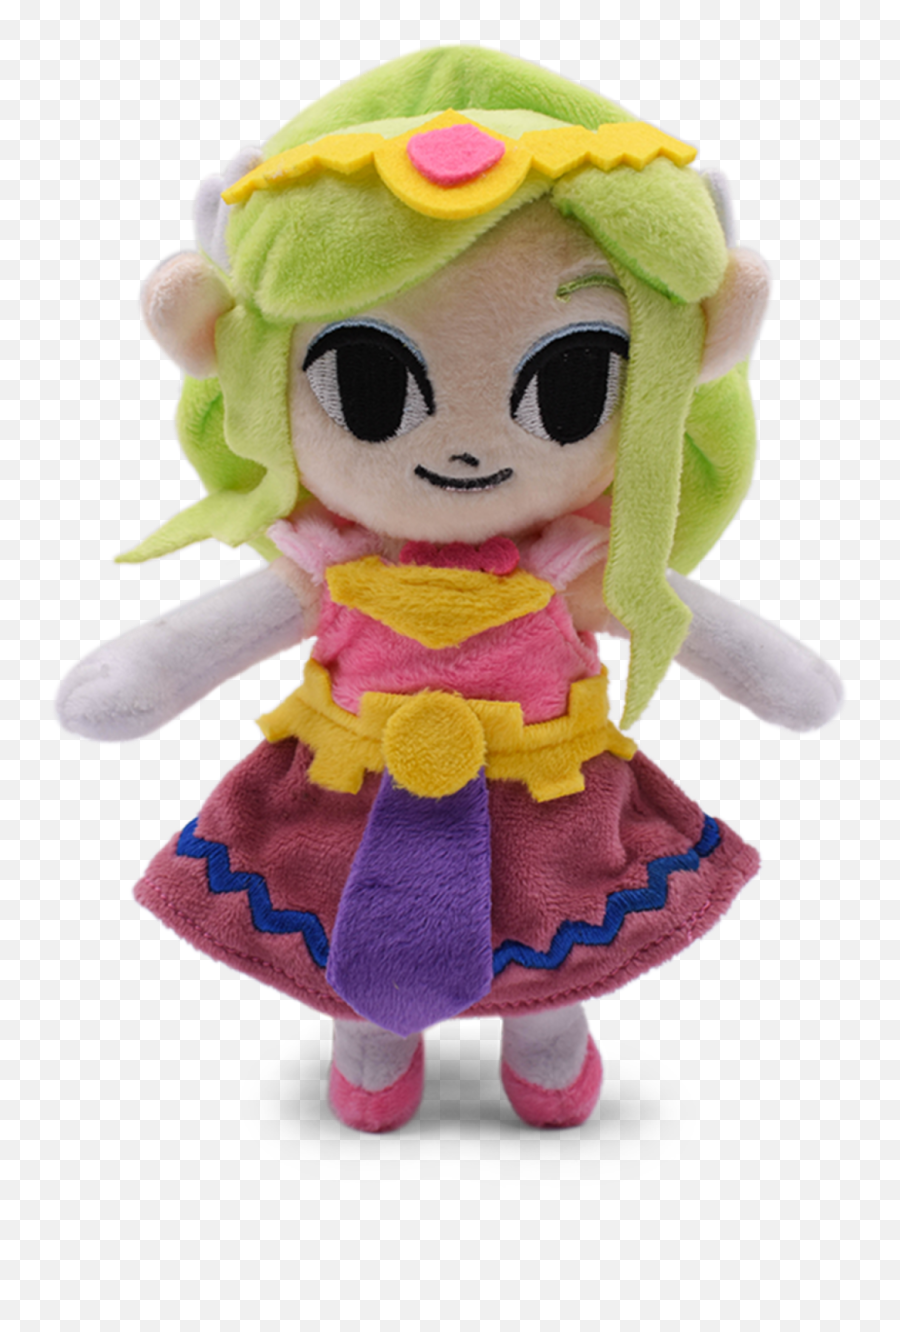 Seekfunning Zelda Princess Plush Toy Great Gift Png Aim Doll Buddy Icon